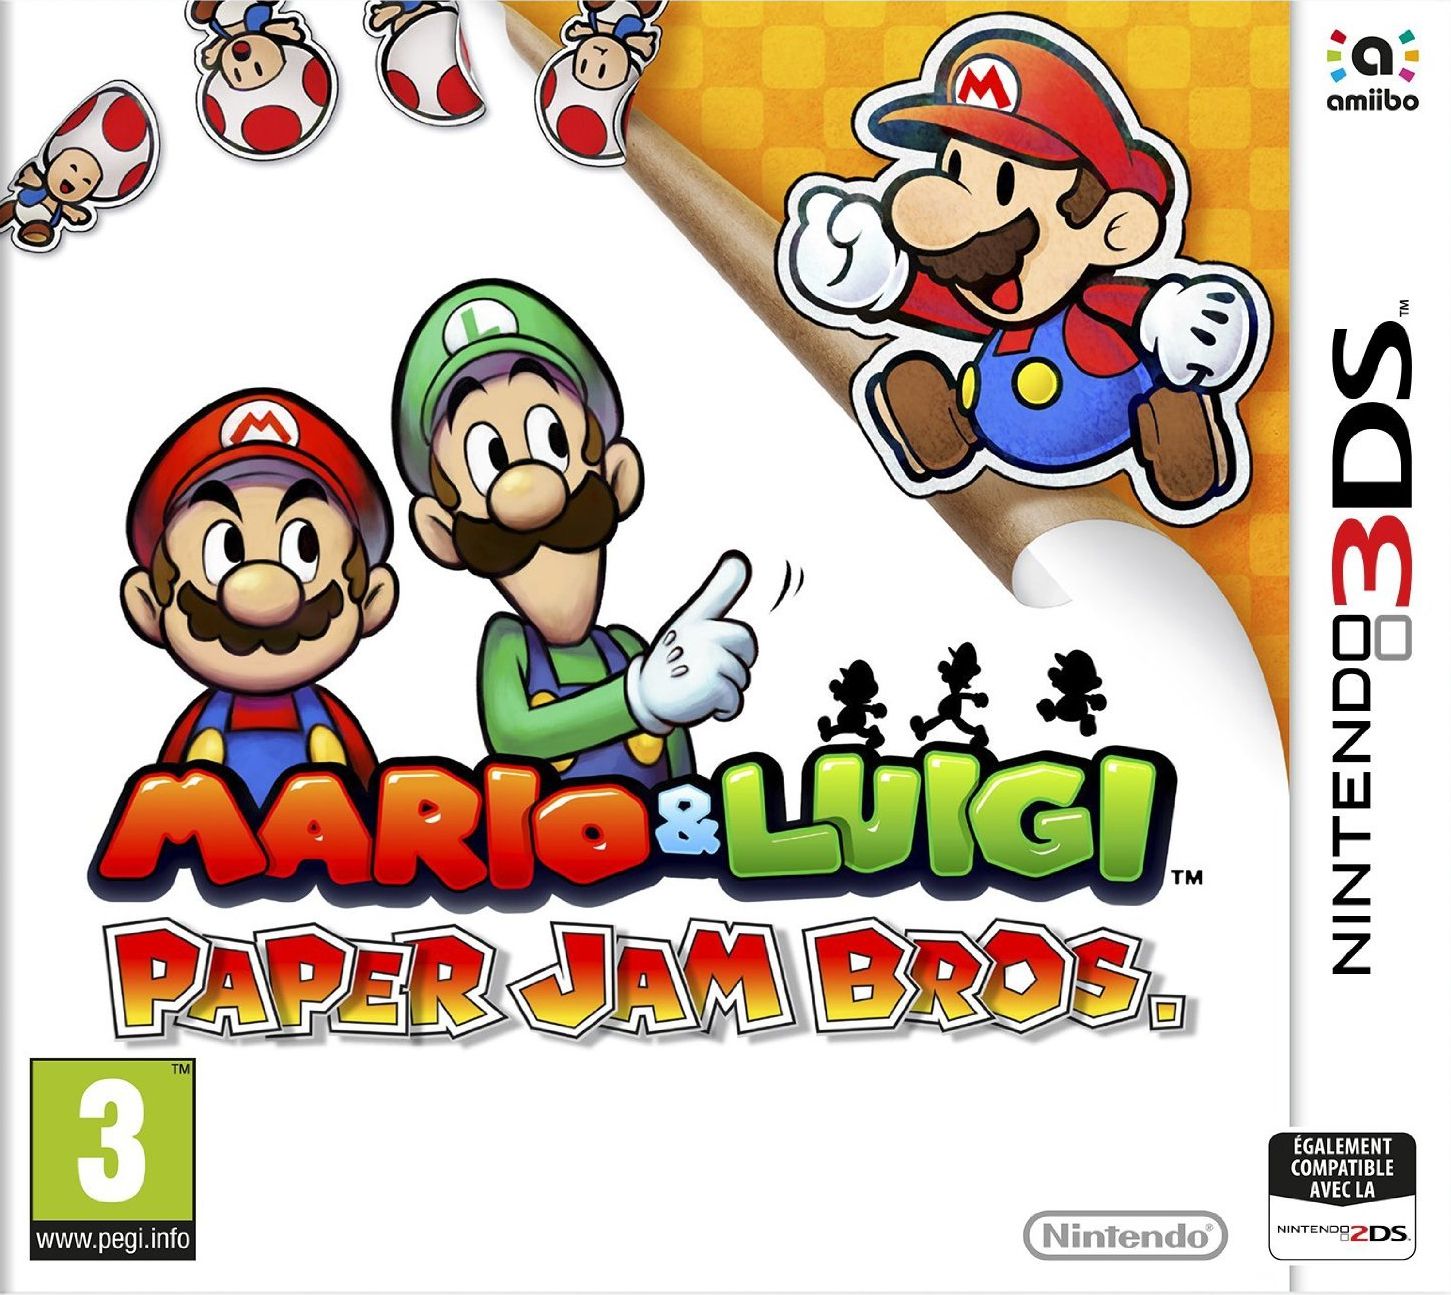 jaquette de Mario & Luigi: Paper Jam Bros. sur 3DS